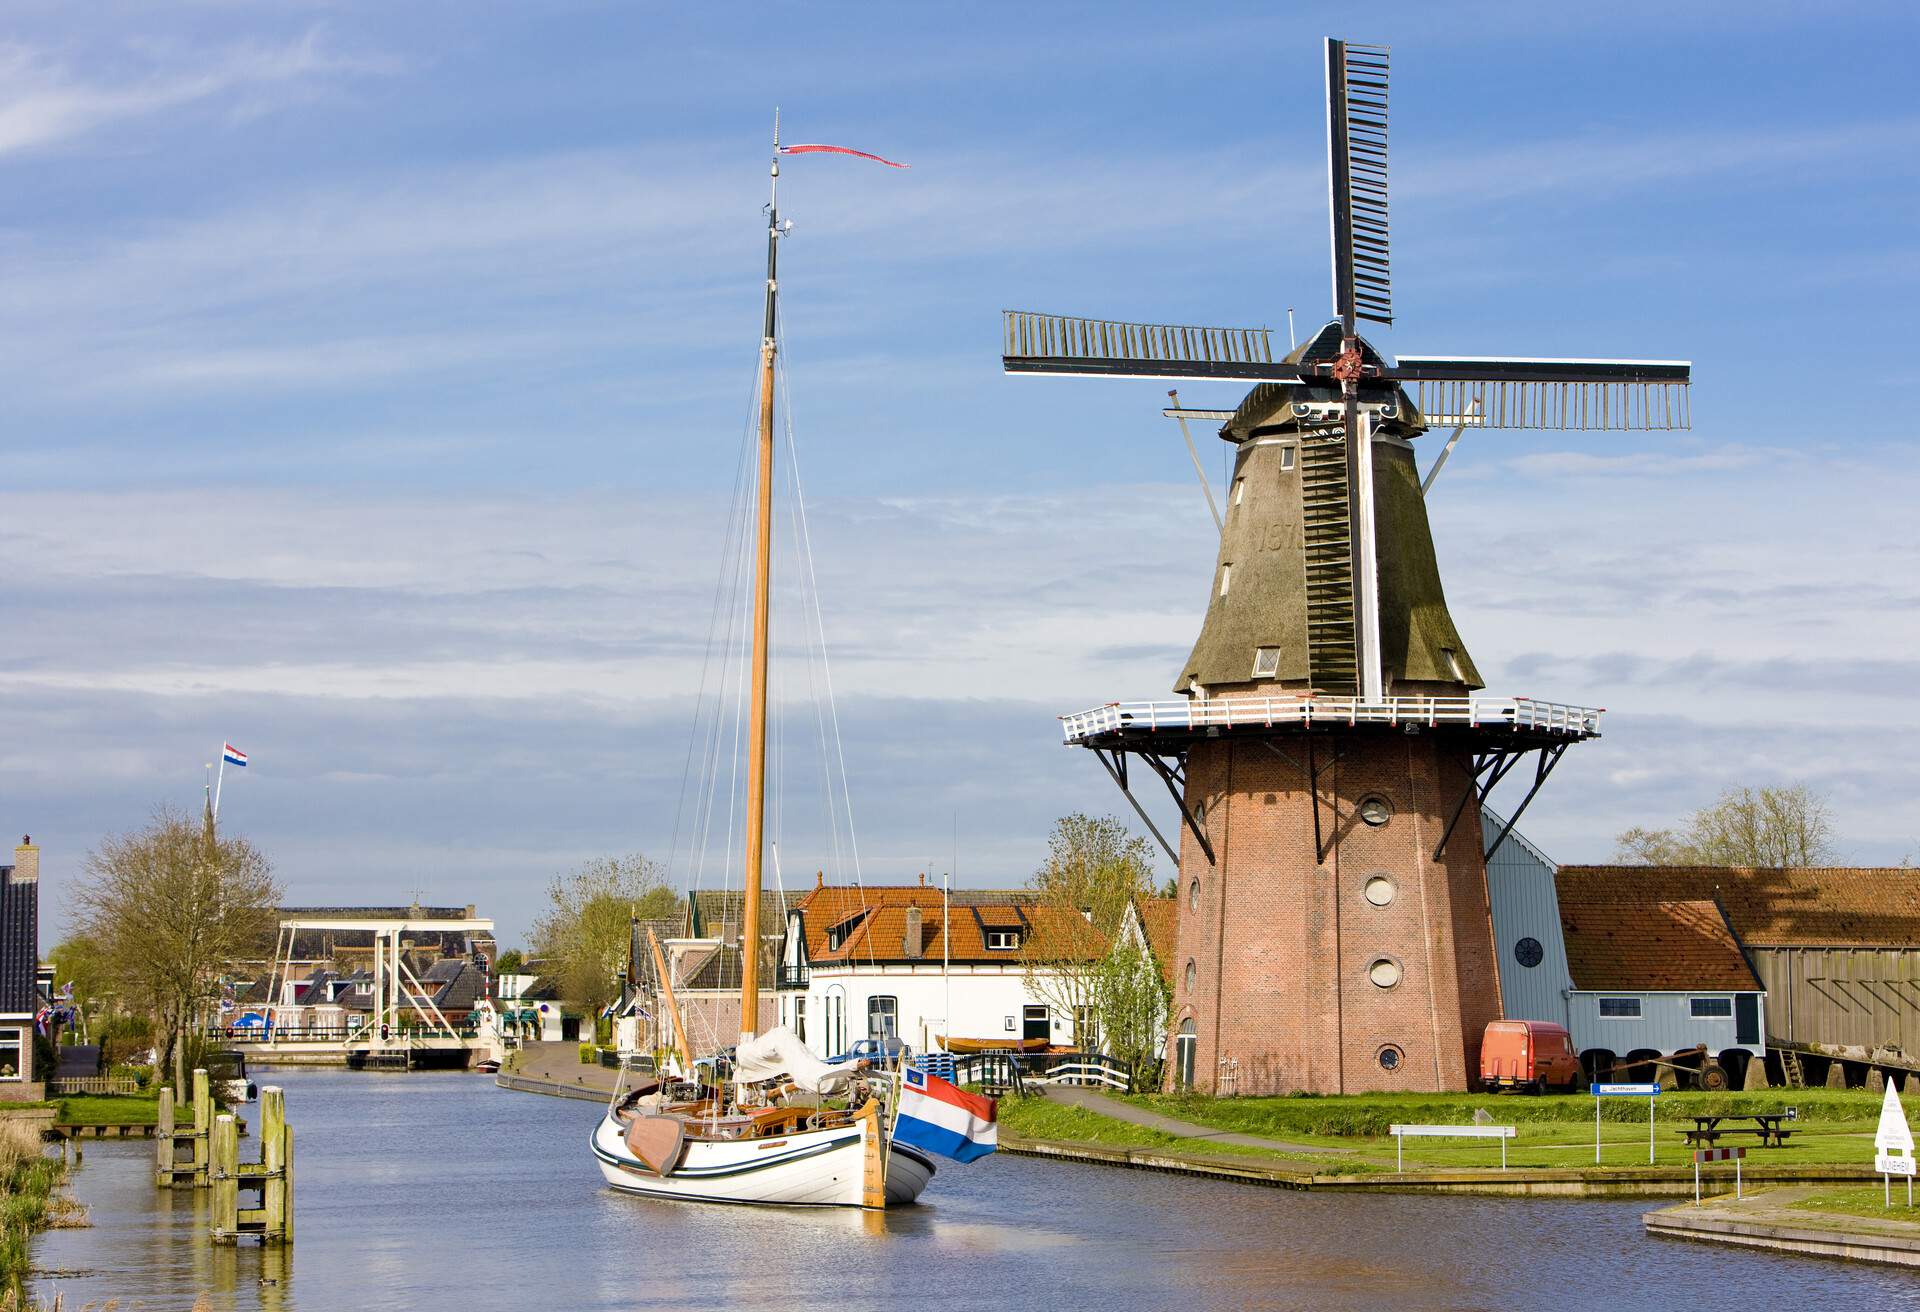 Burdaard, Friesland, Netherlands; Shutterstock ID 61257094